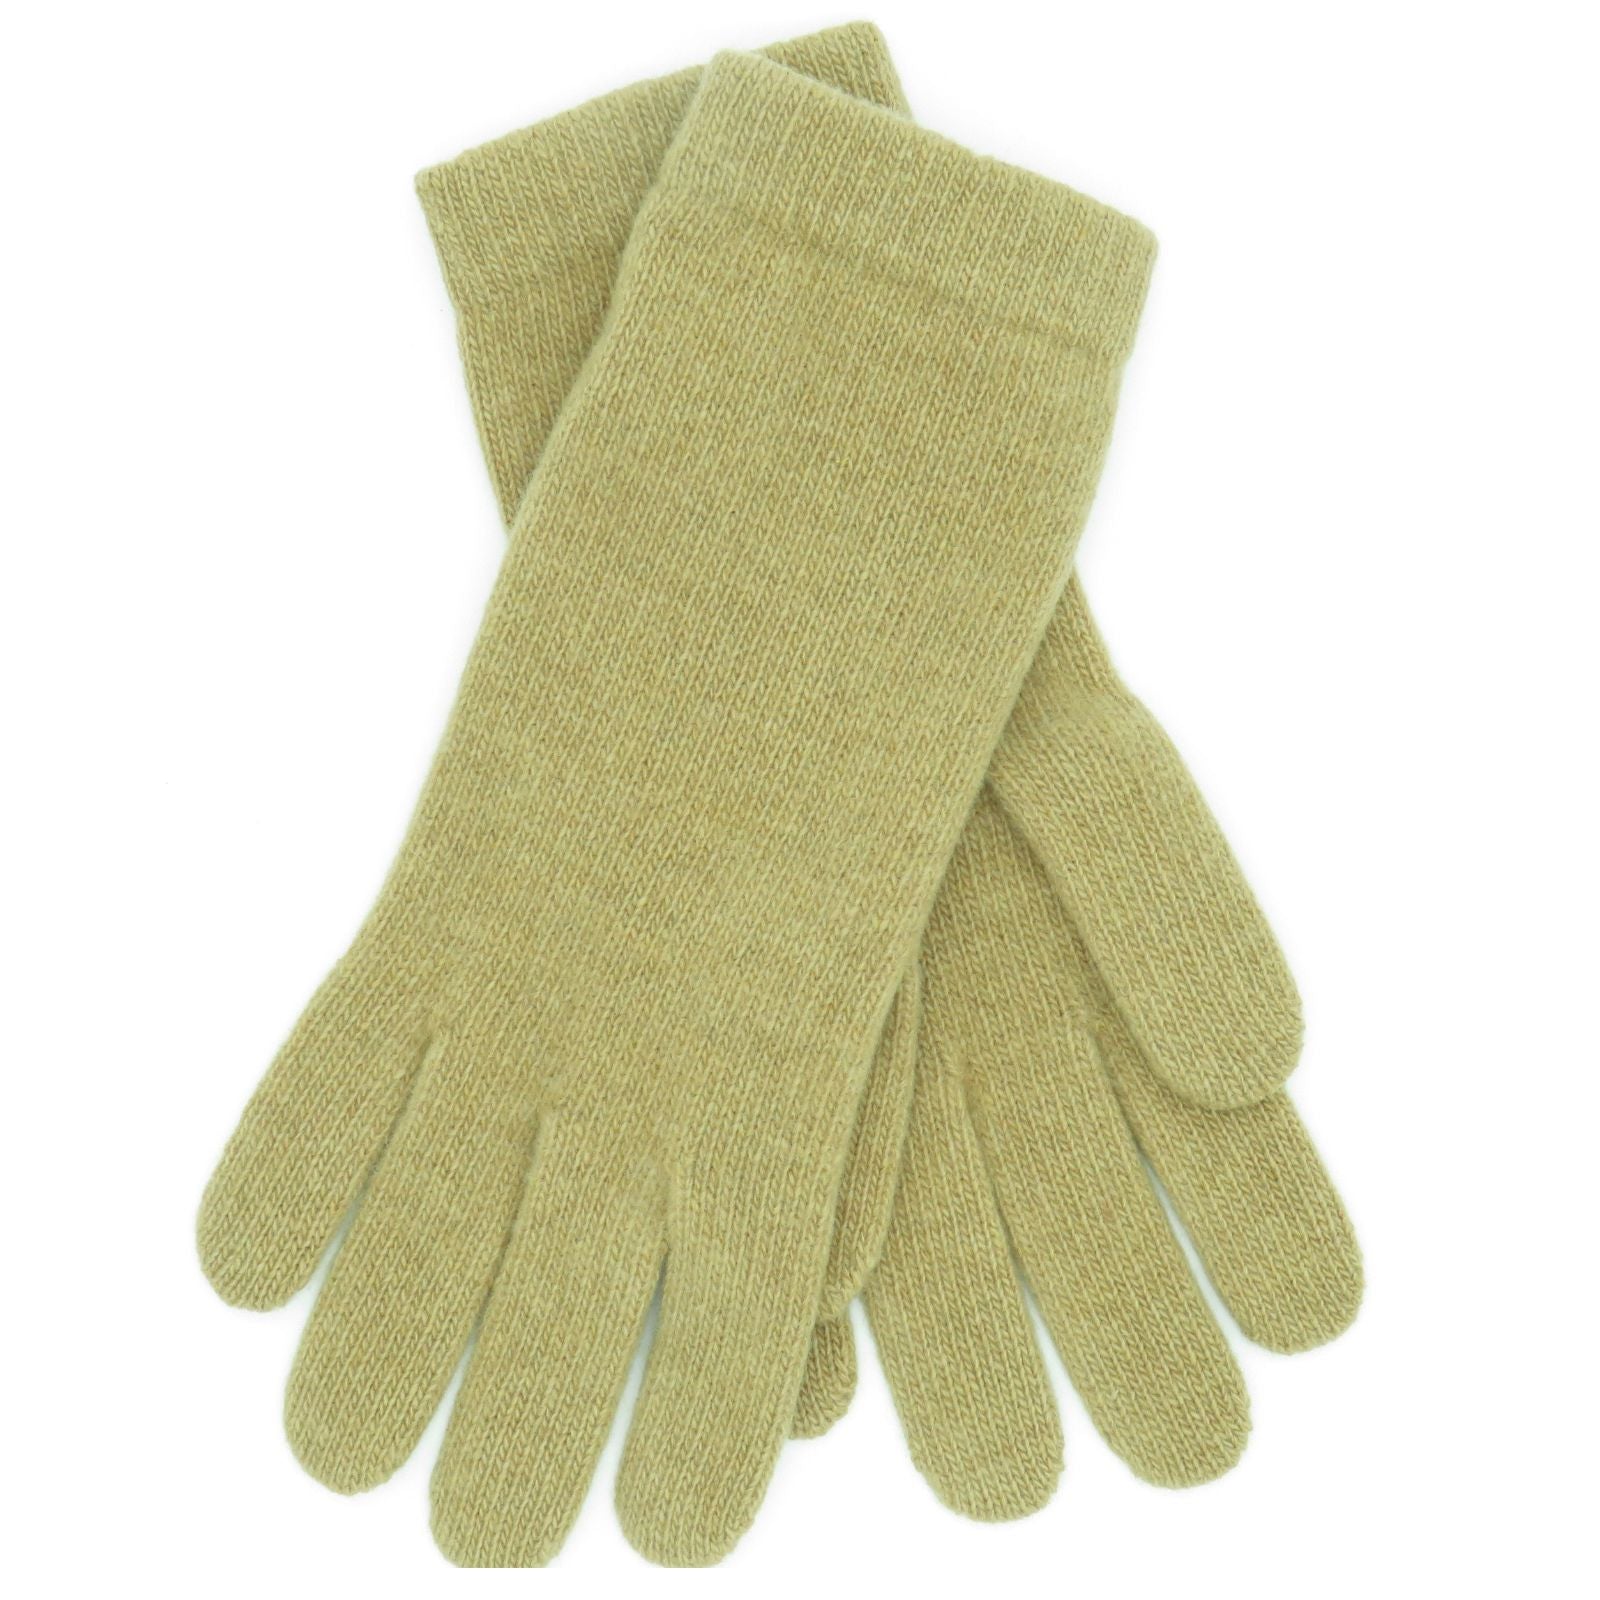 Cashmere Knit Glove